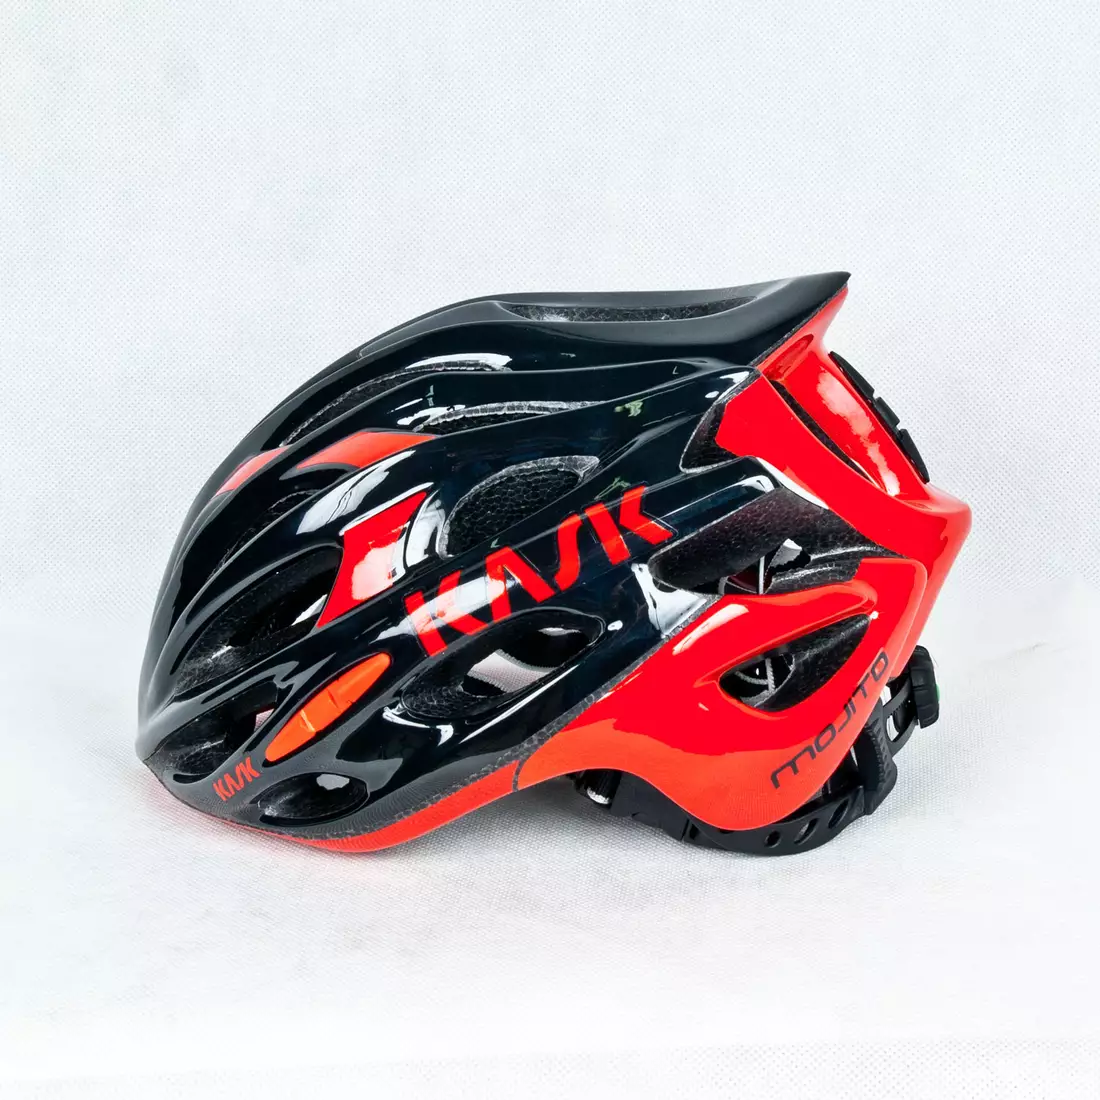 CASCA MOJITO - casca de bicicleta CHE00044.226 culoare: negru si rosu